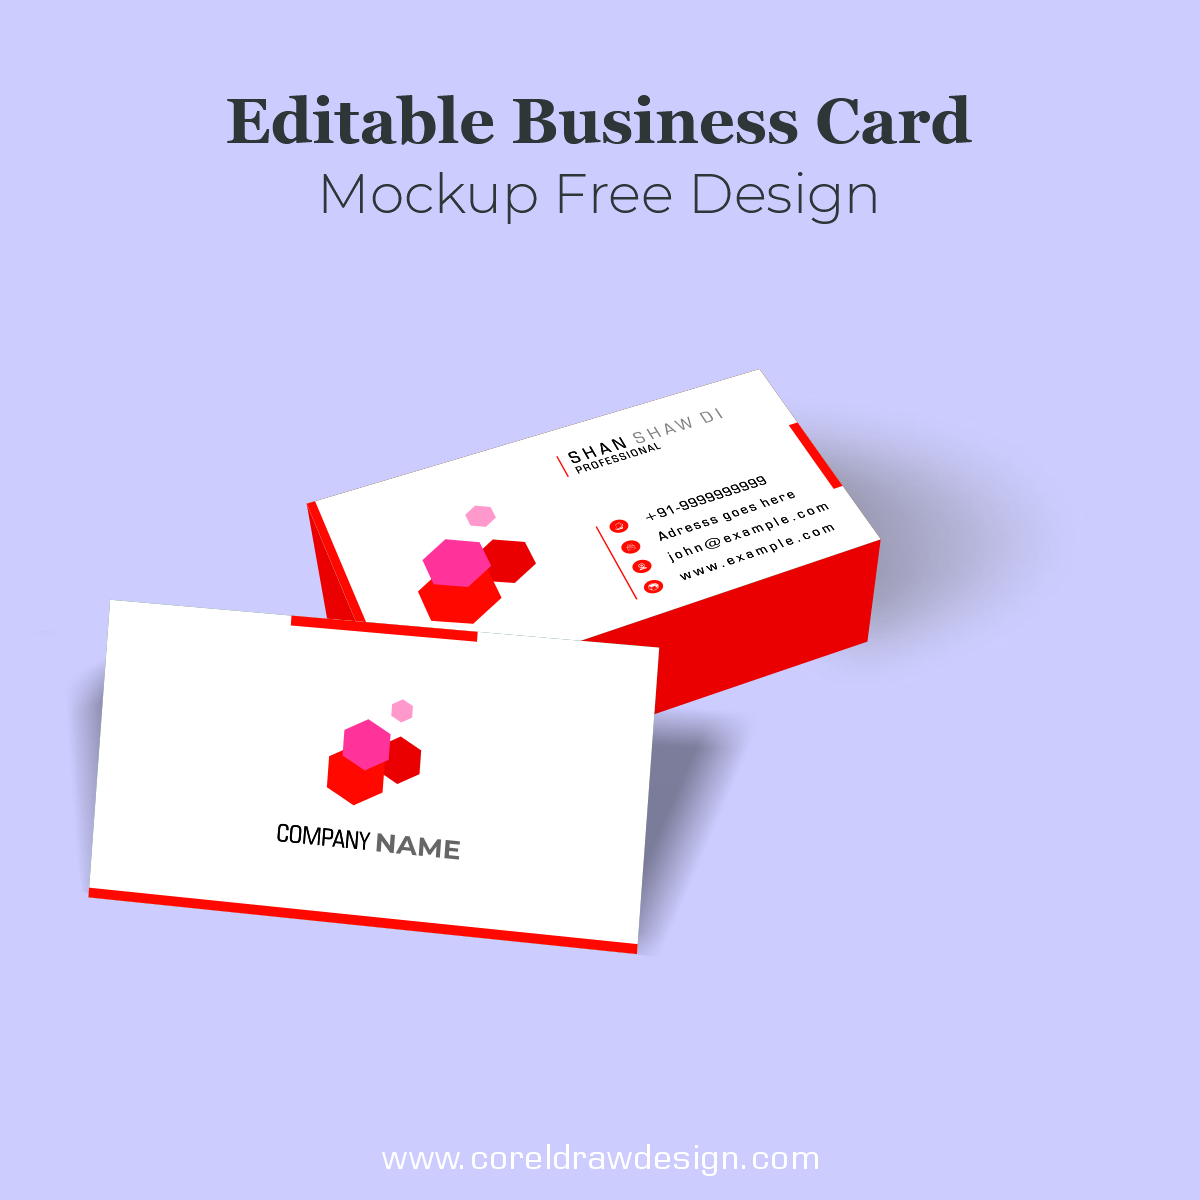 Editable Business Card Mockup Free Design